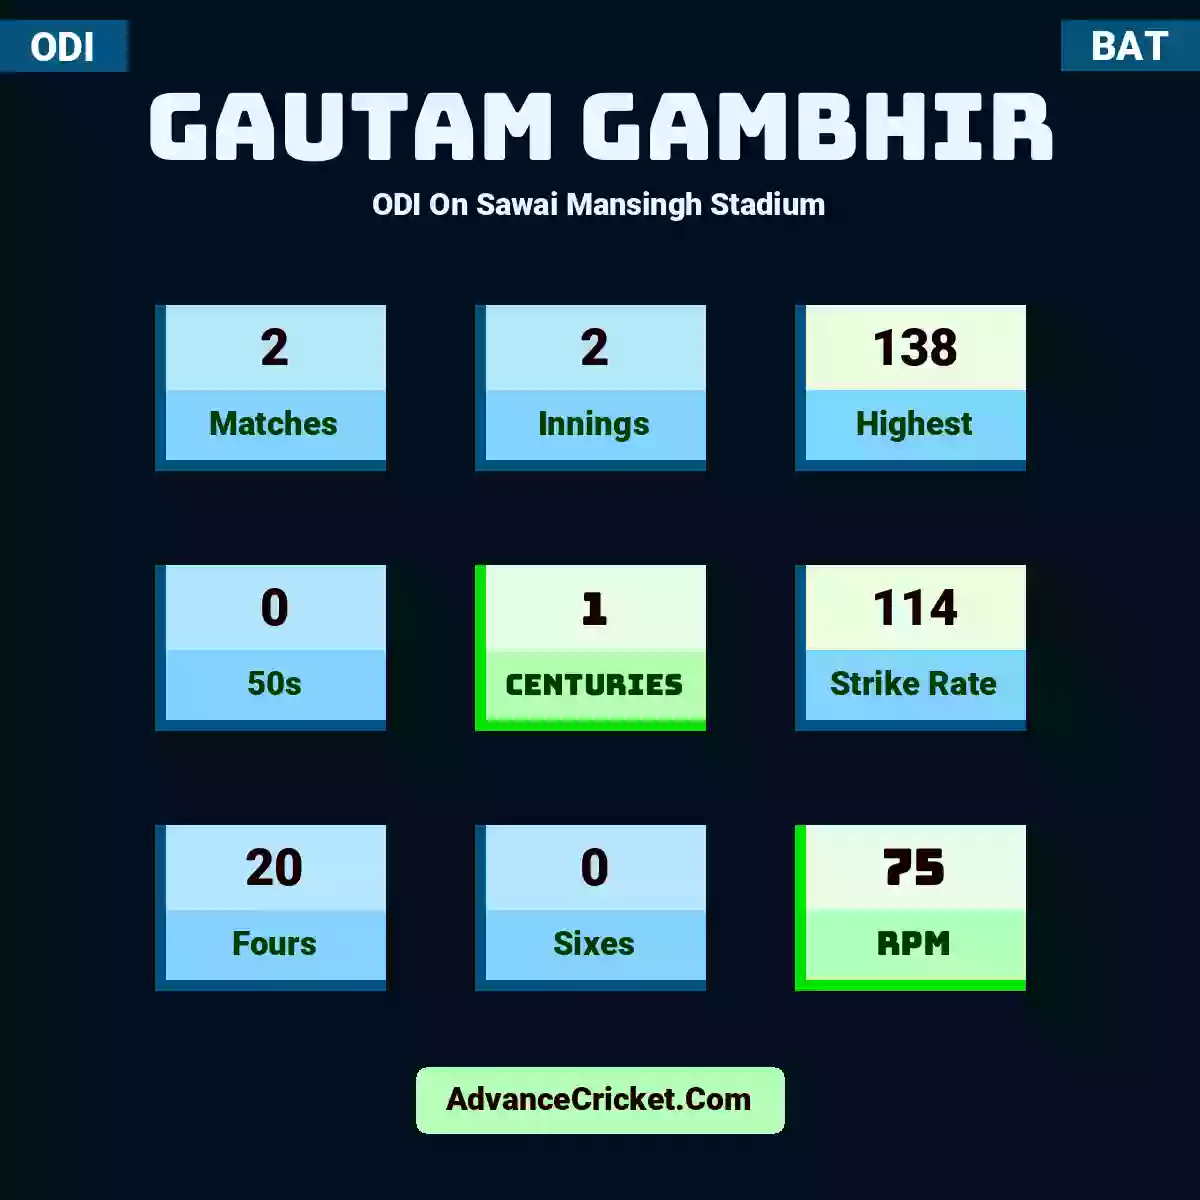 Gautam Gambhir ODI  On Sawai Mansingh Stadium, Gautam Gambhir played 2 matches, scored 138 runs as highest, 0 half-centuries, and 1 centuries, with a strike rate of 114. G.Gambhir hit 20 fours and 0 sixes, with an RPM of 75.